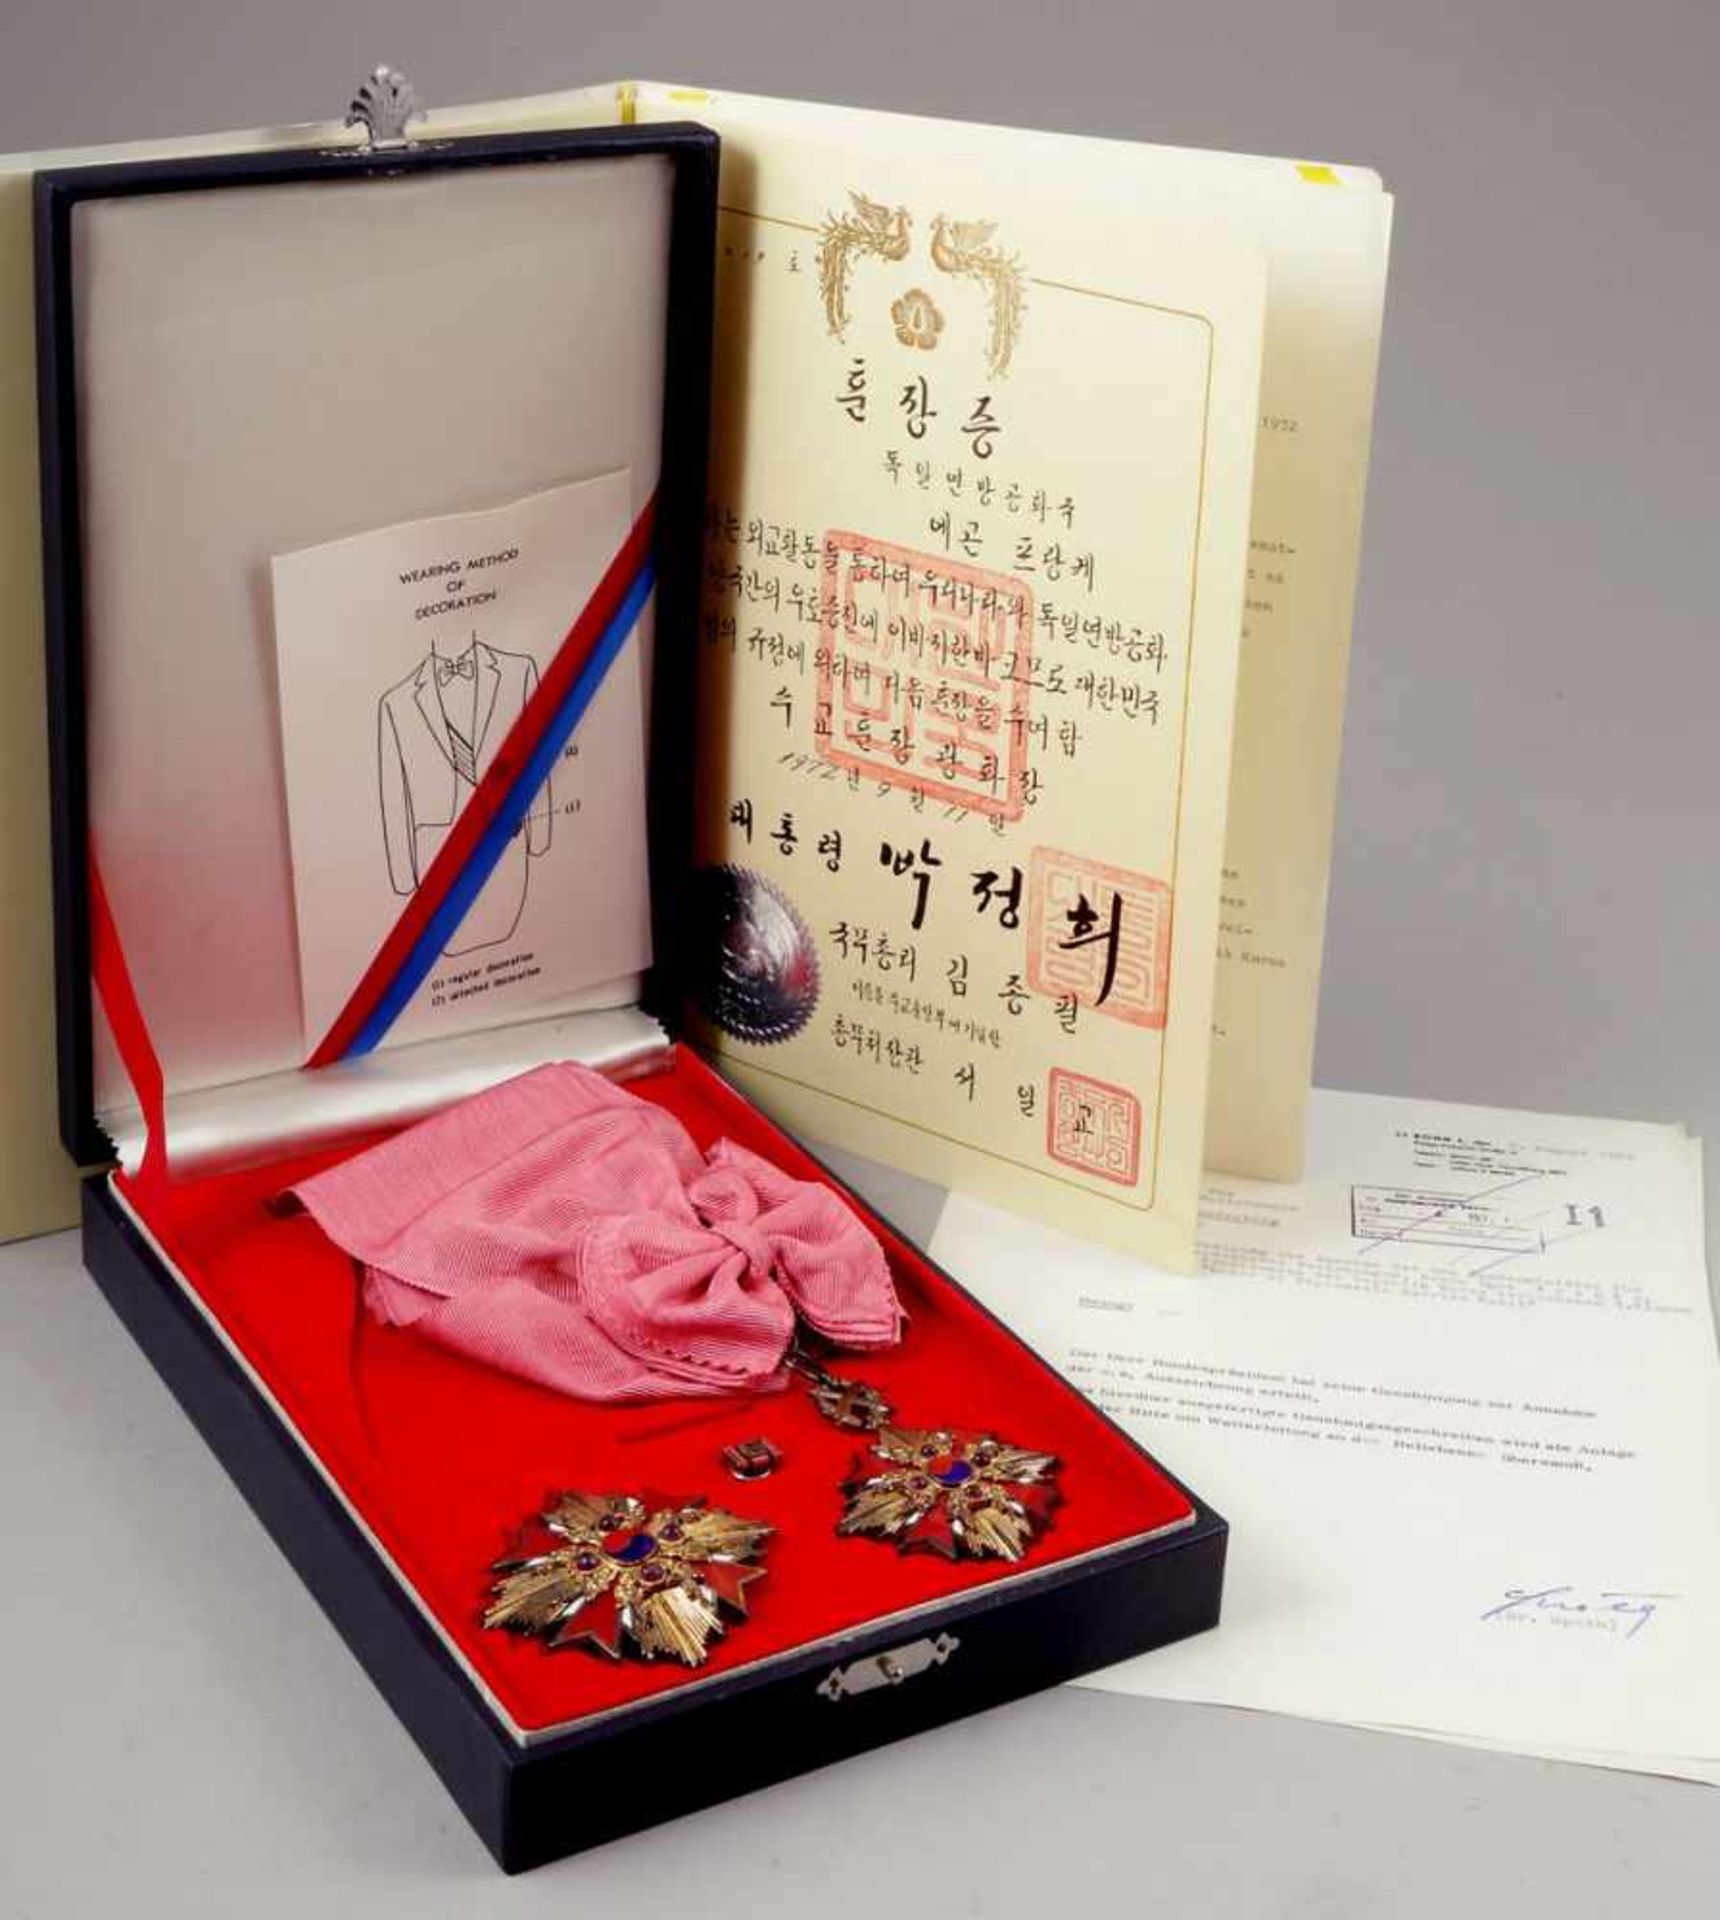 Gwanghwa Orden Diplomatischer VerdienstordenKorea. Vergoldet. Etui. Großer Bruststern. Stern am